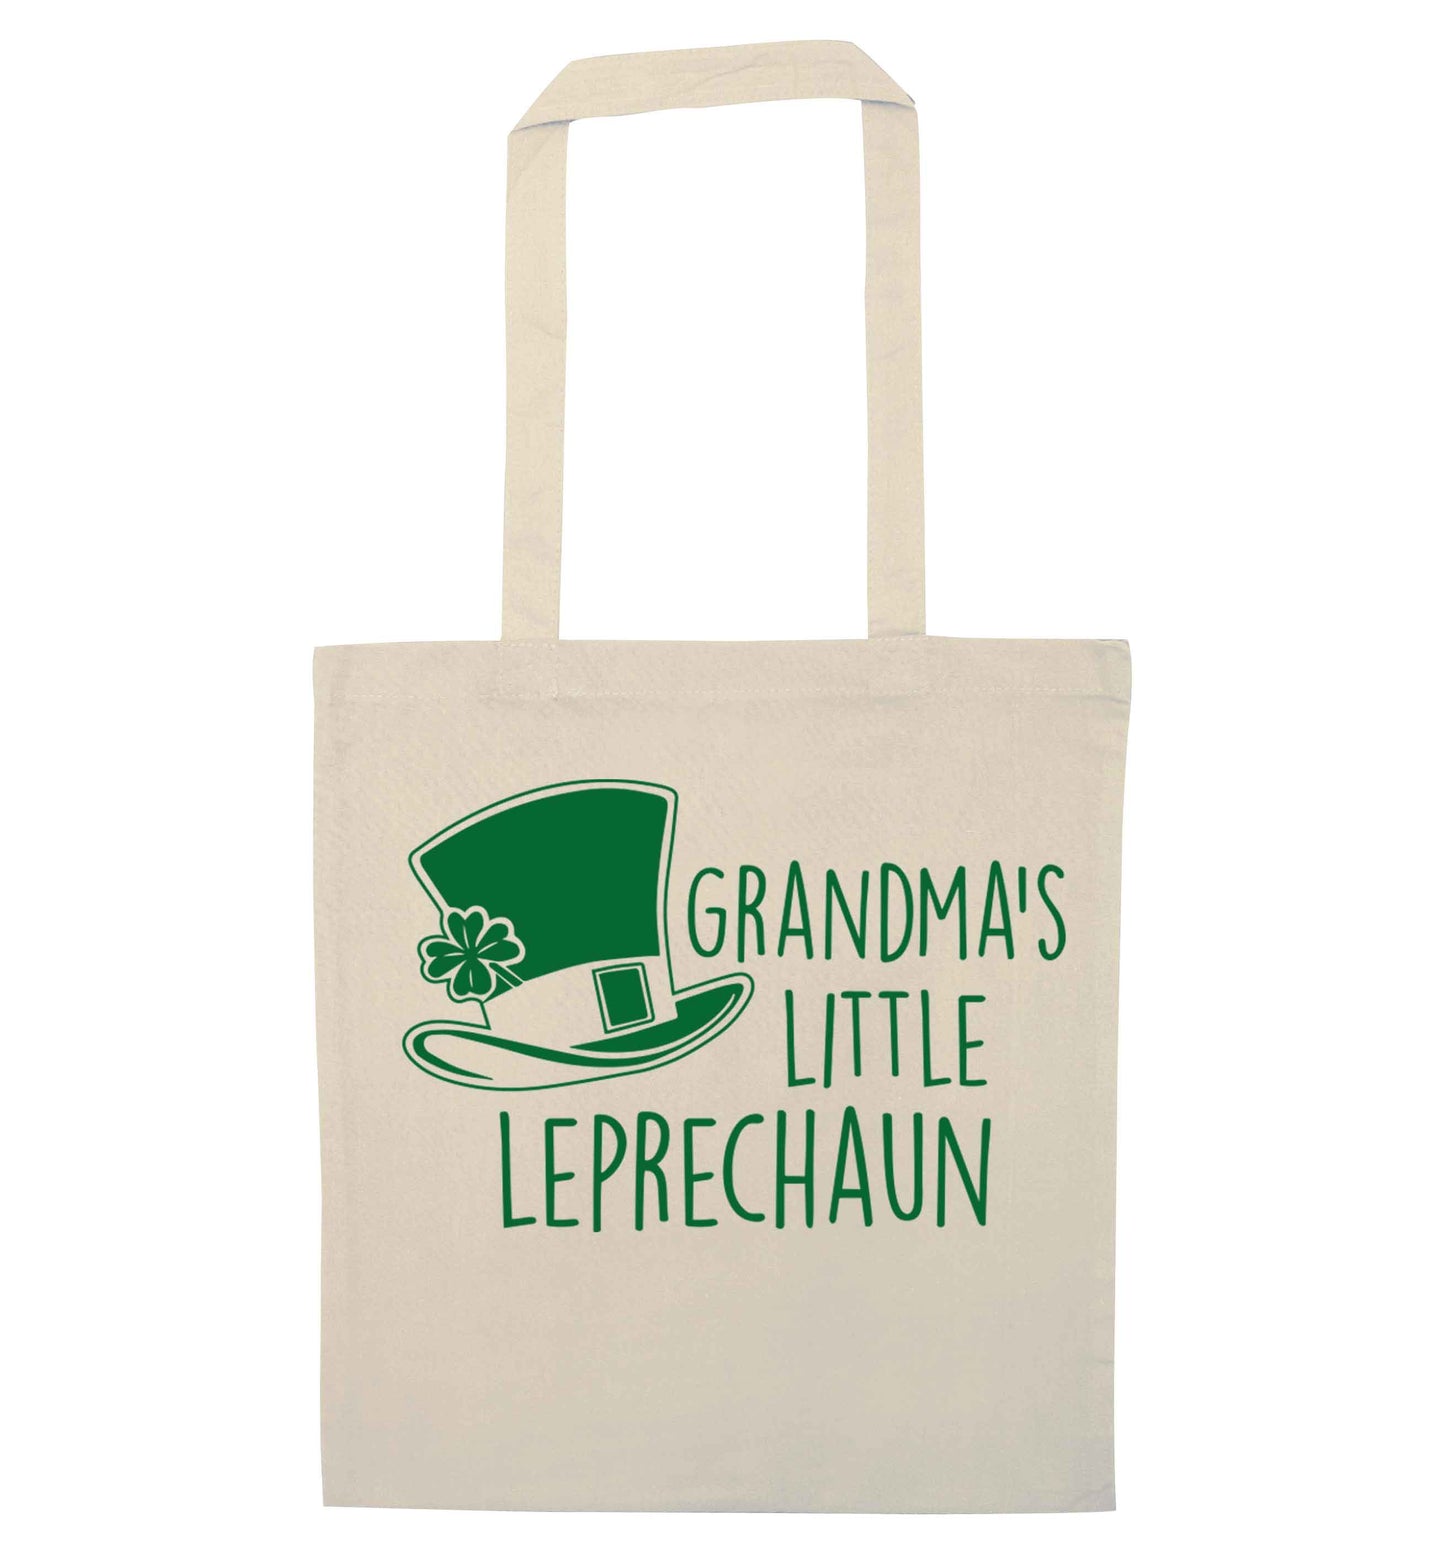 Grandma's little leprechaun natural tote bag